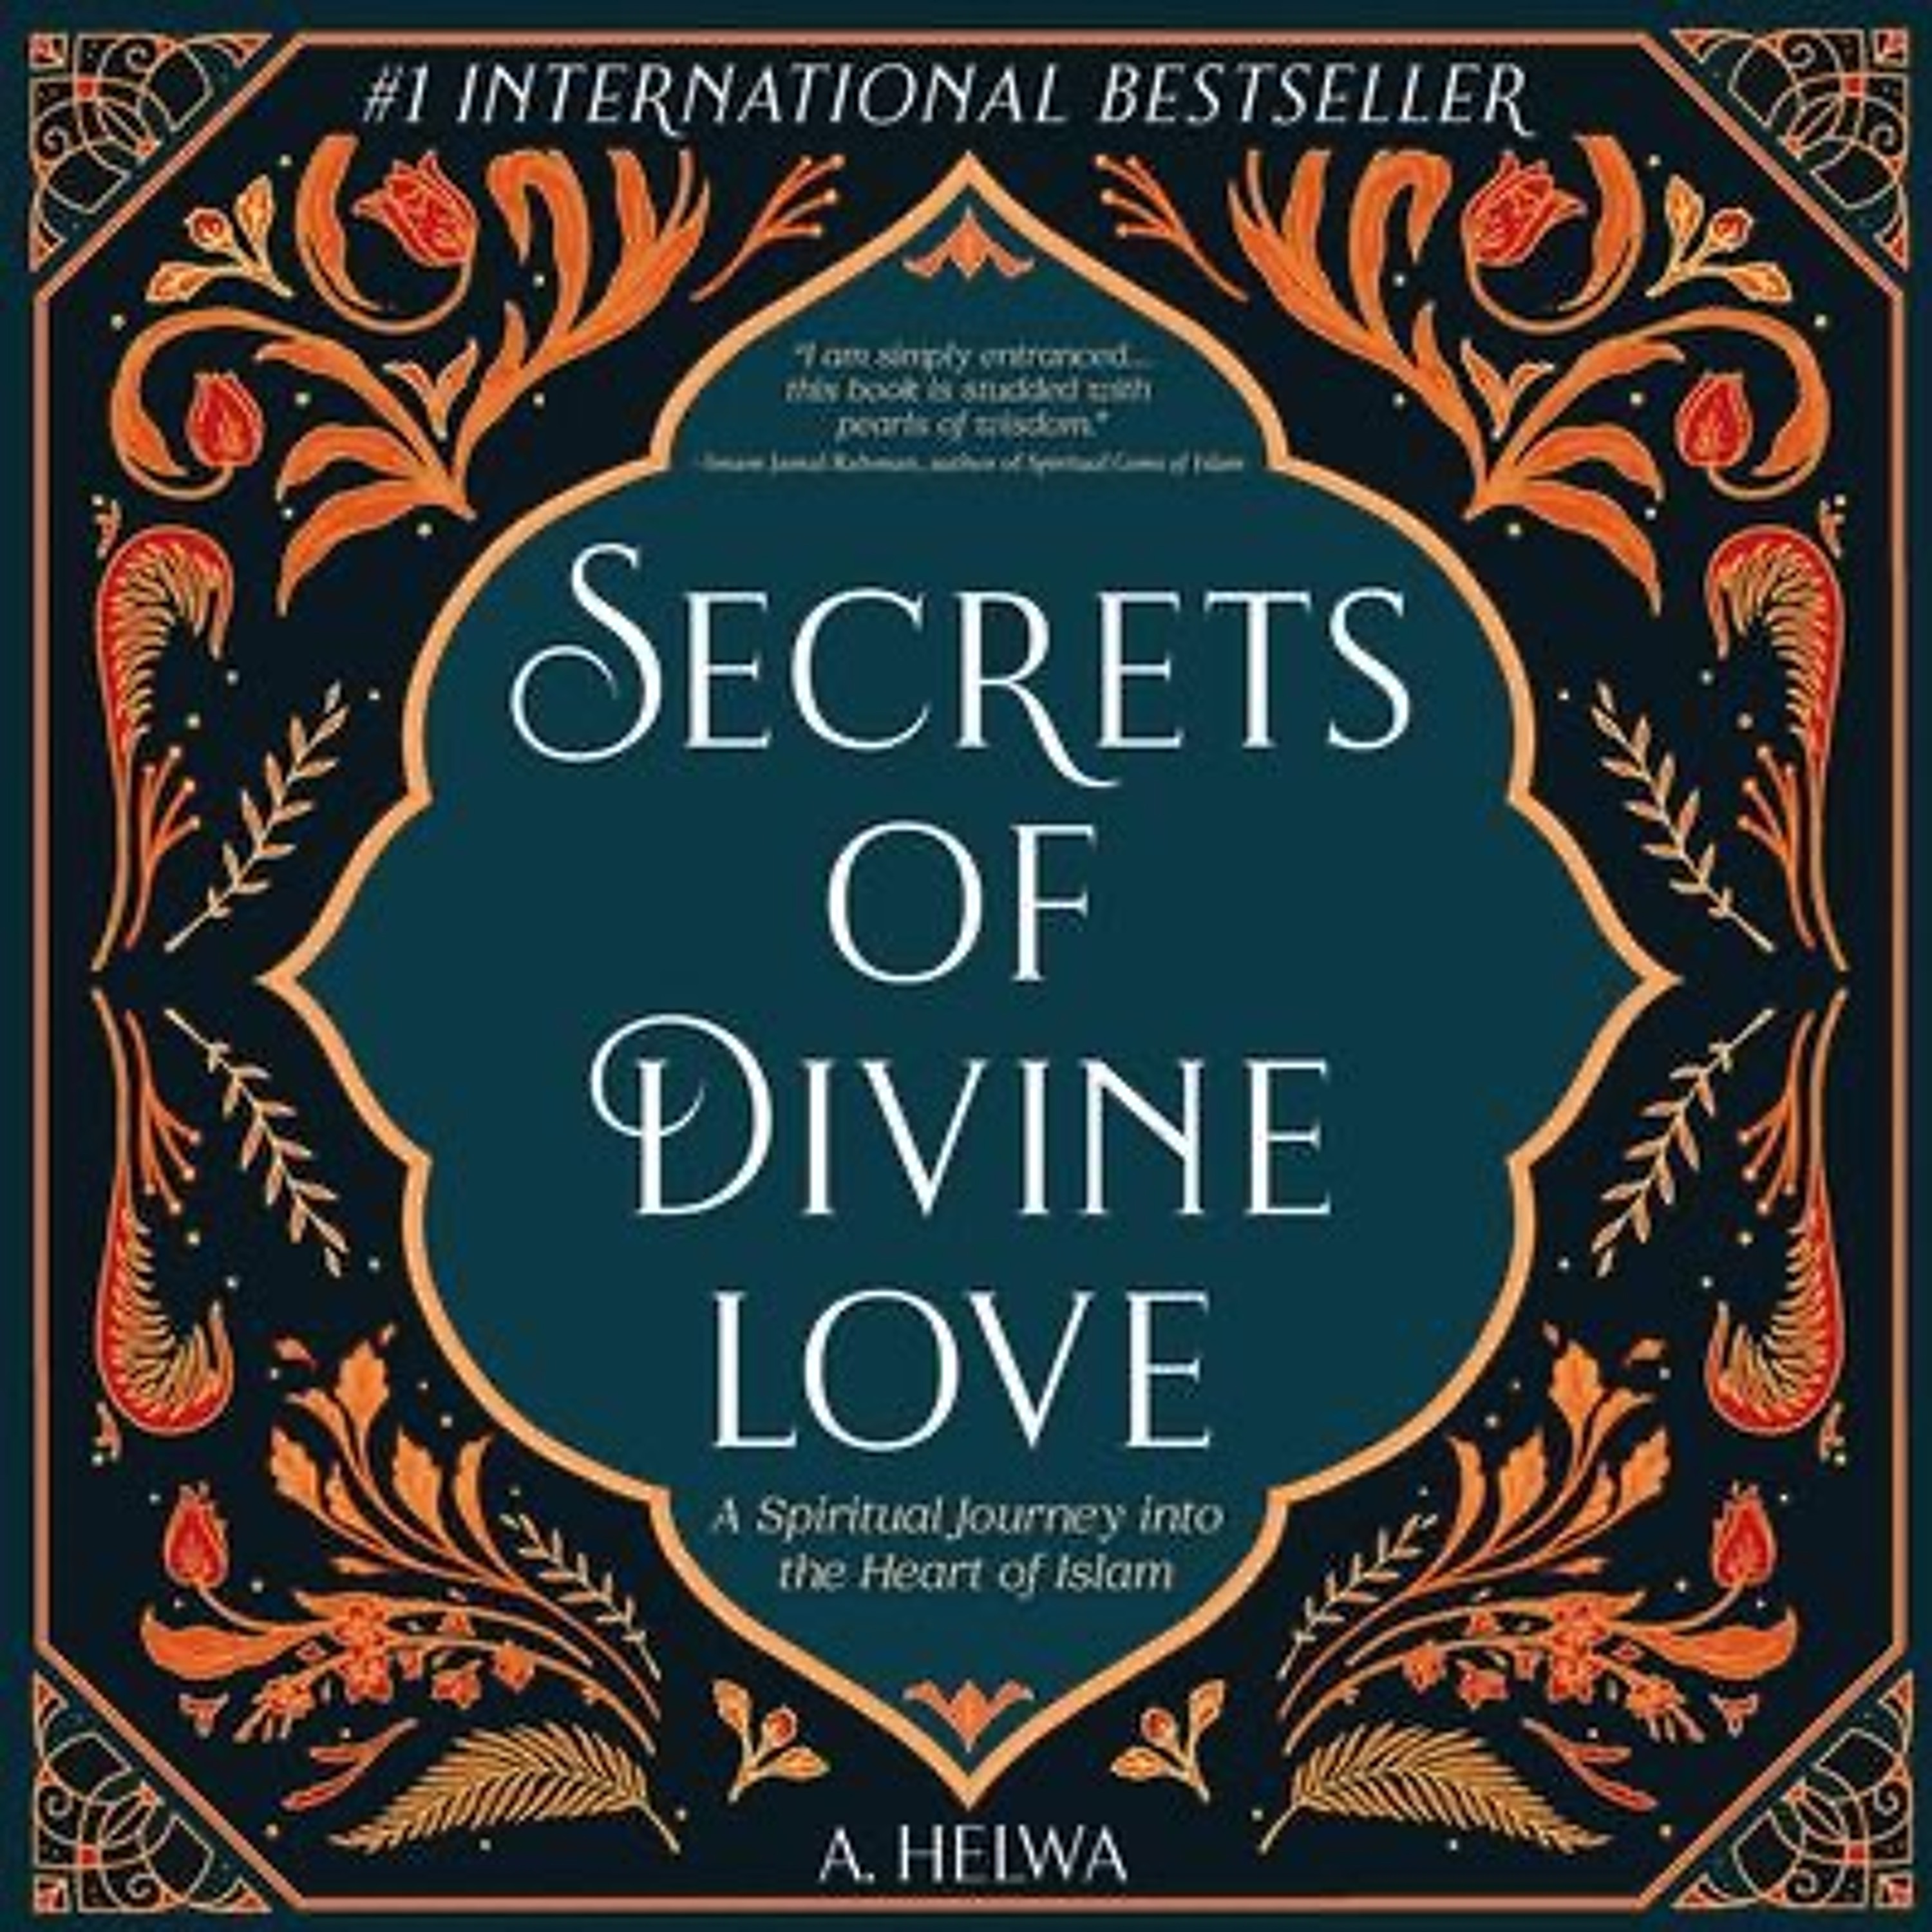 #060: Secrets of Divine Love: A Spiritual Journey into the Heart of Islam w/ A. Helwa